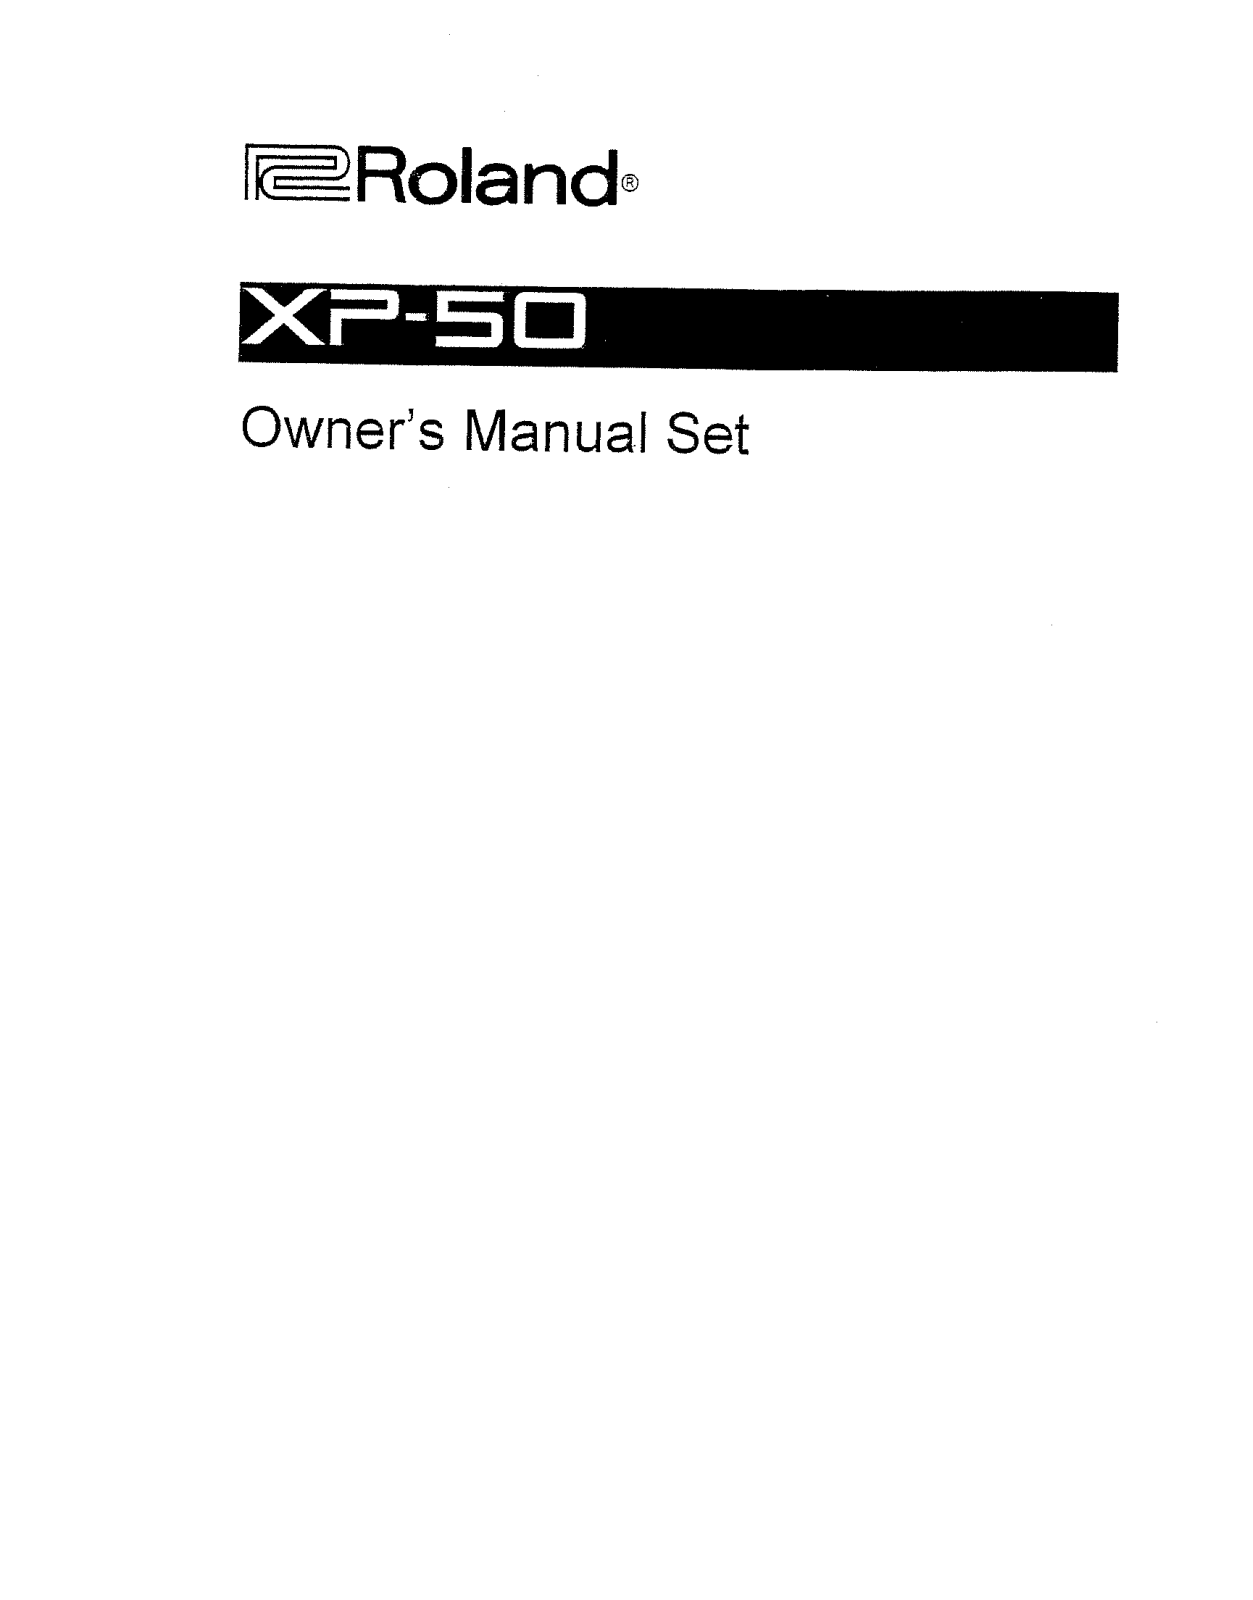 Roland XP-50 User Manual